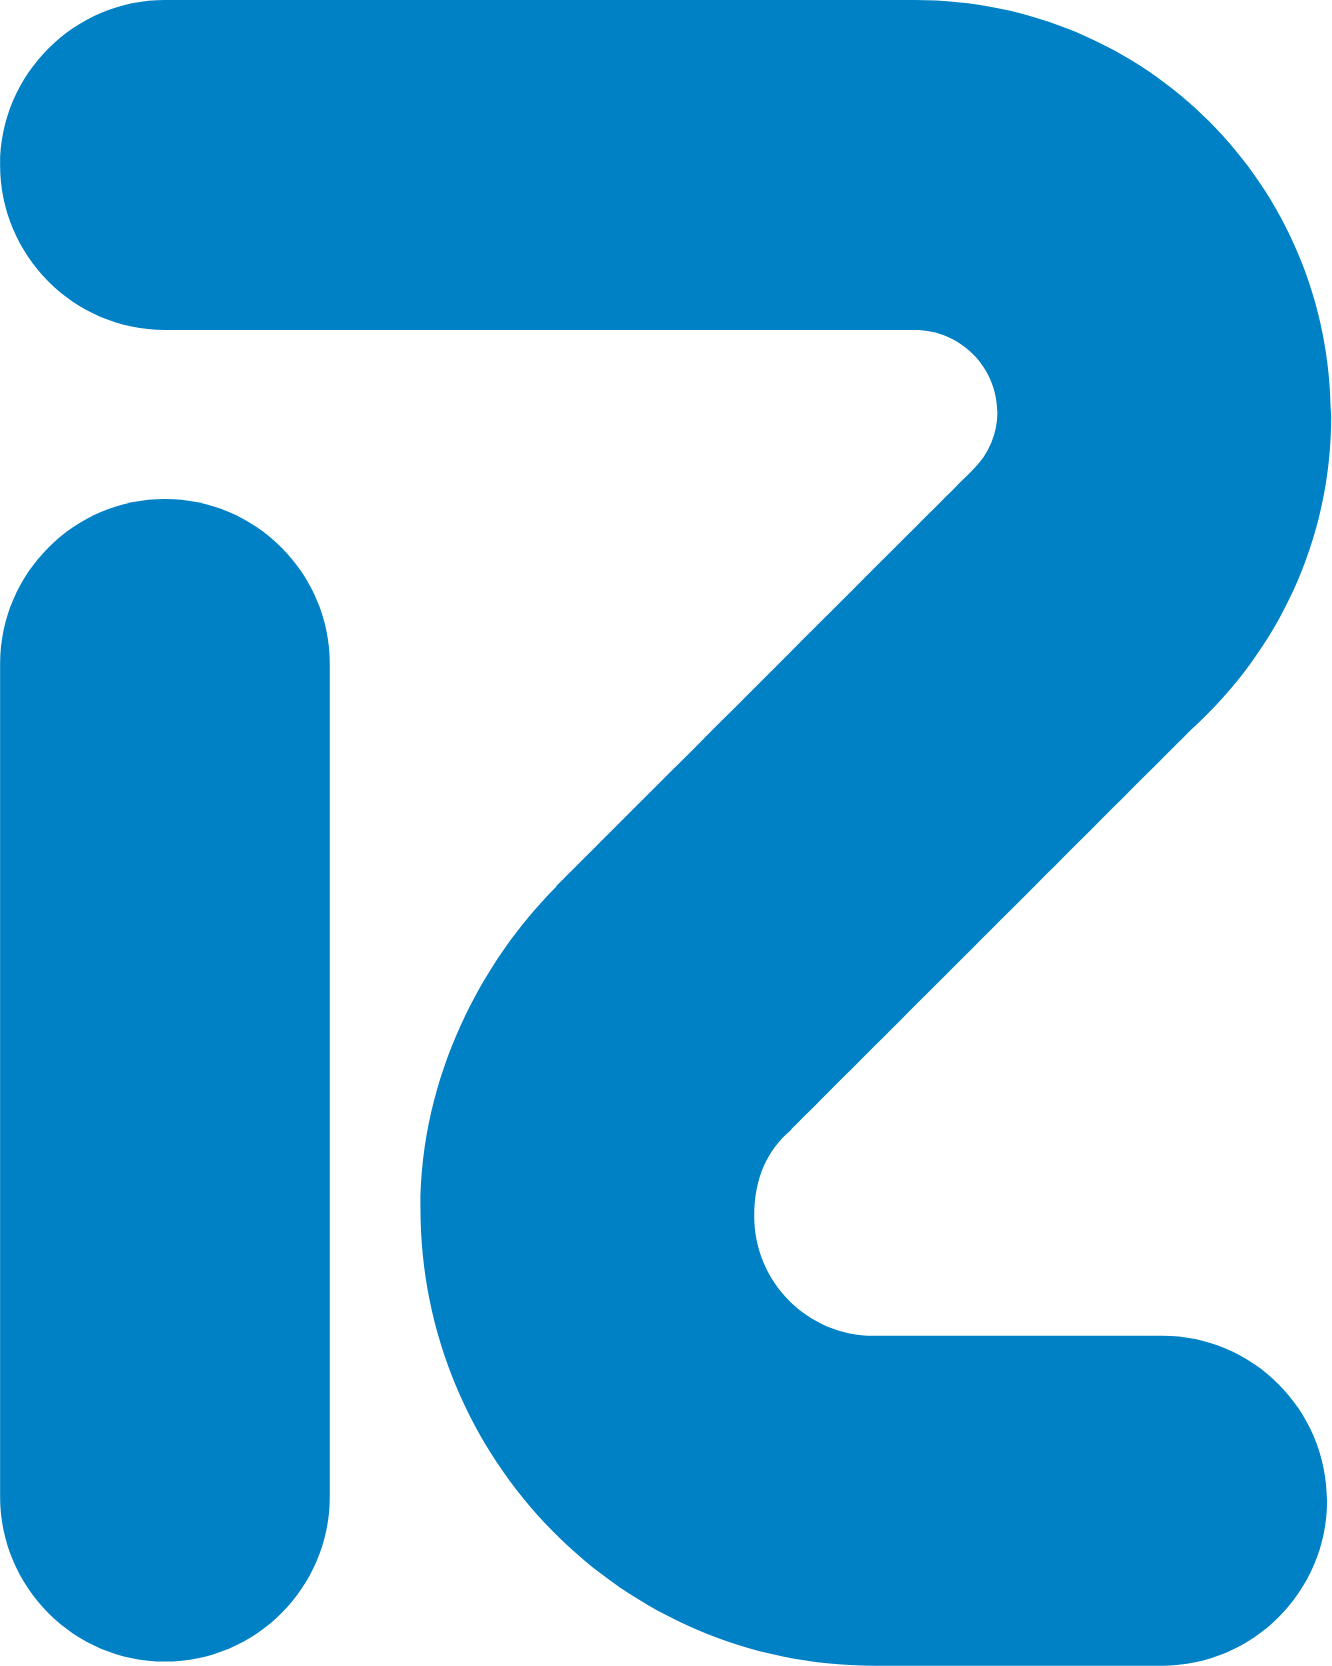 Ross Stores logo (PNG transparent)